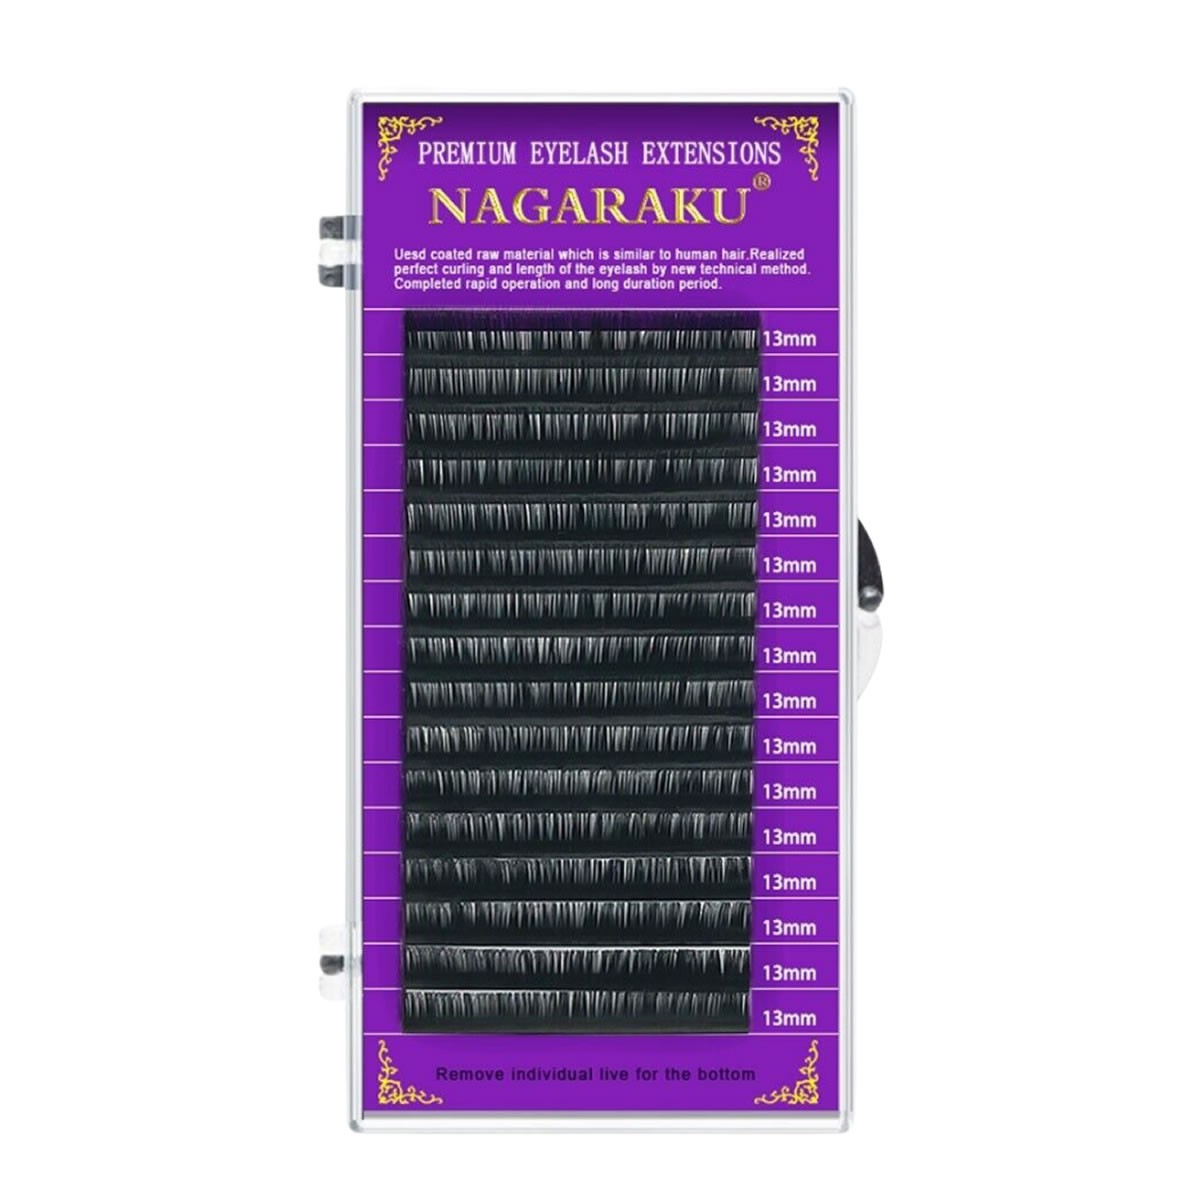 0.10 D Nagaraku ORIGINALES Pestañas Individuales de Mink, Súper Suaves